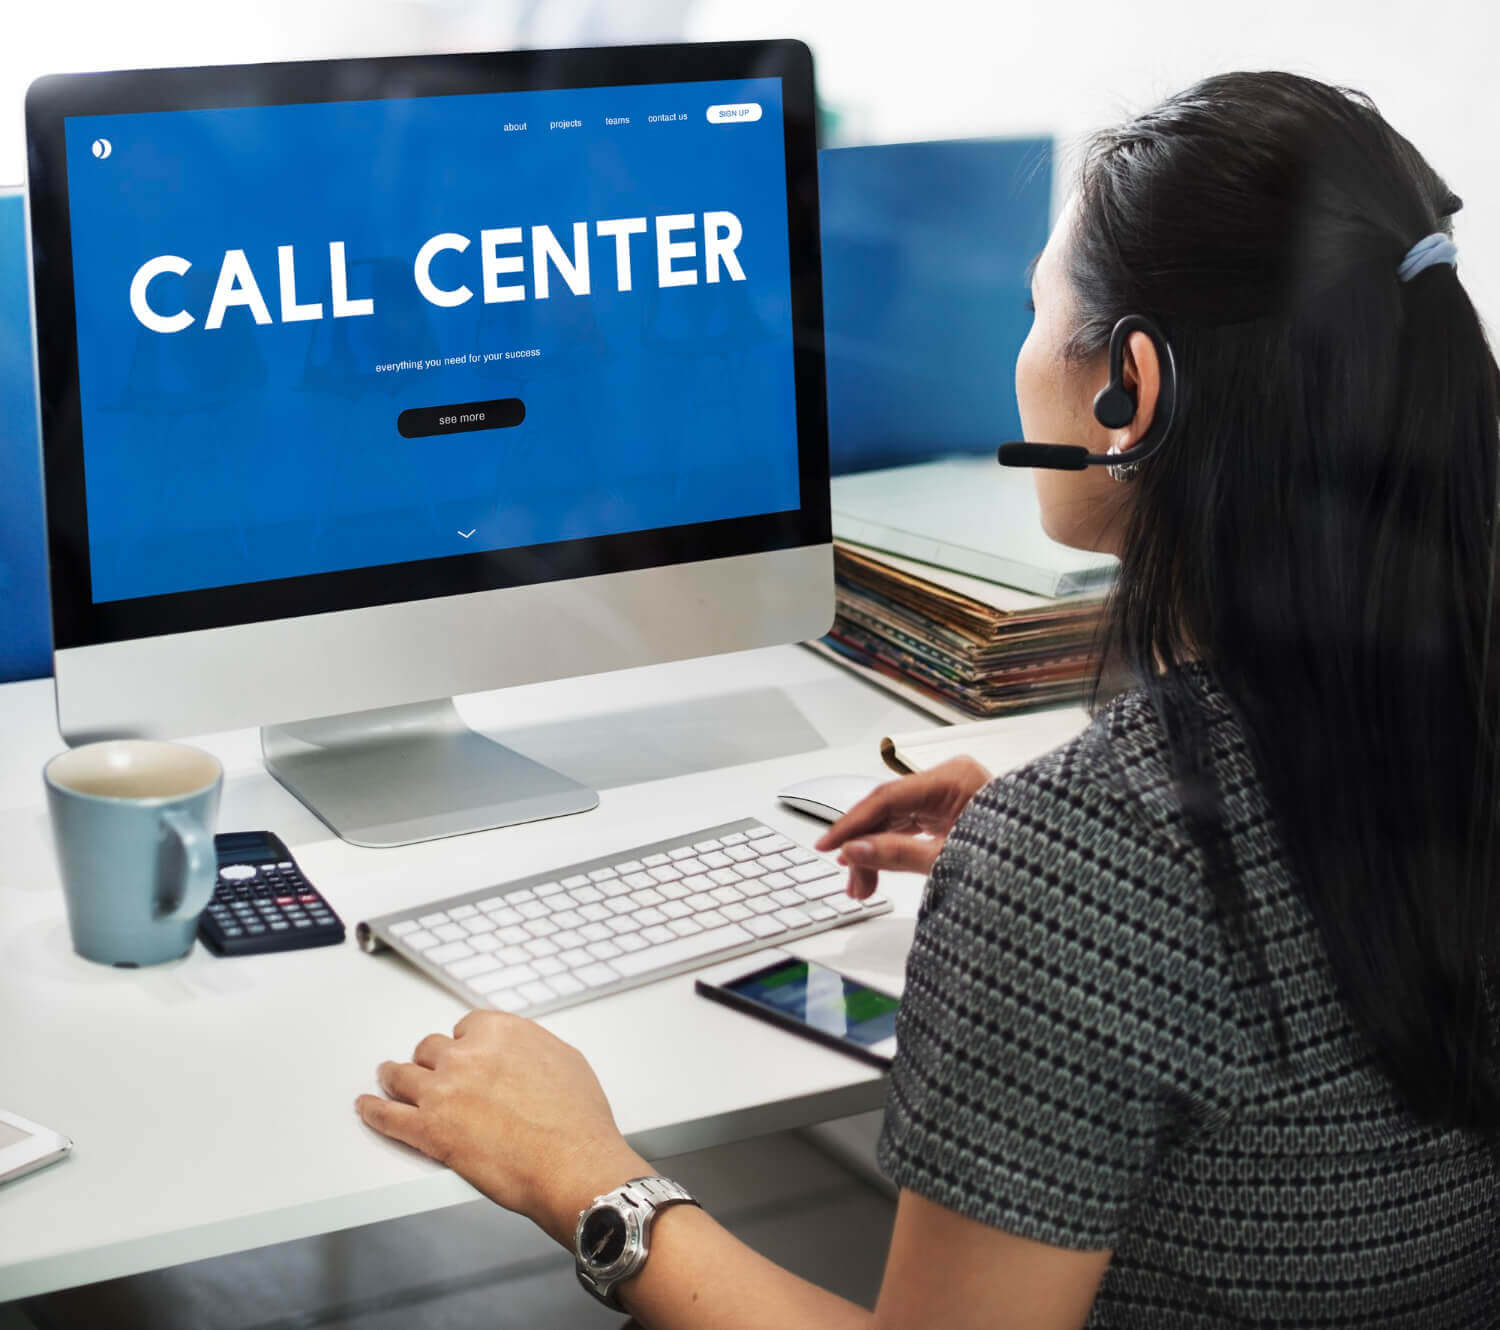 Skill wajib call center